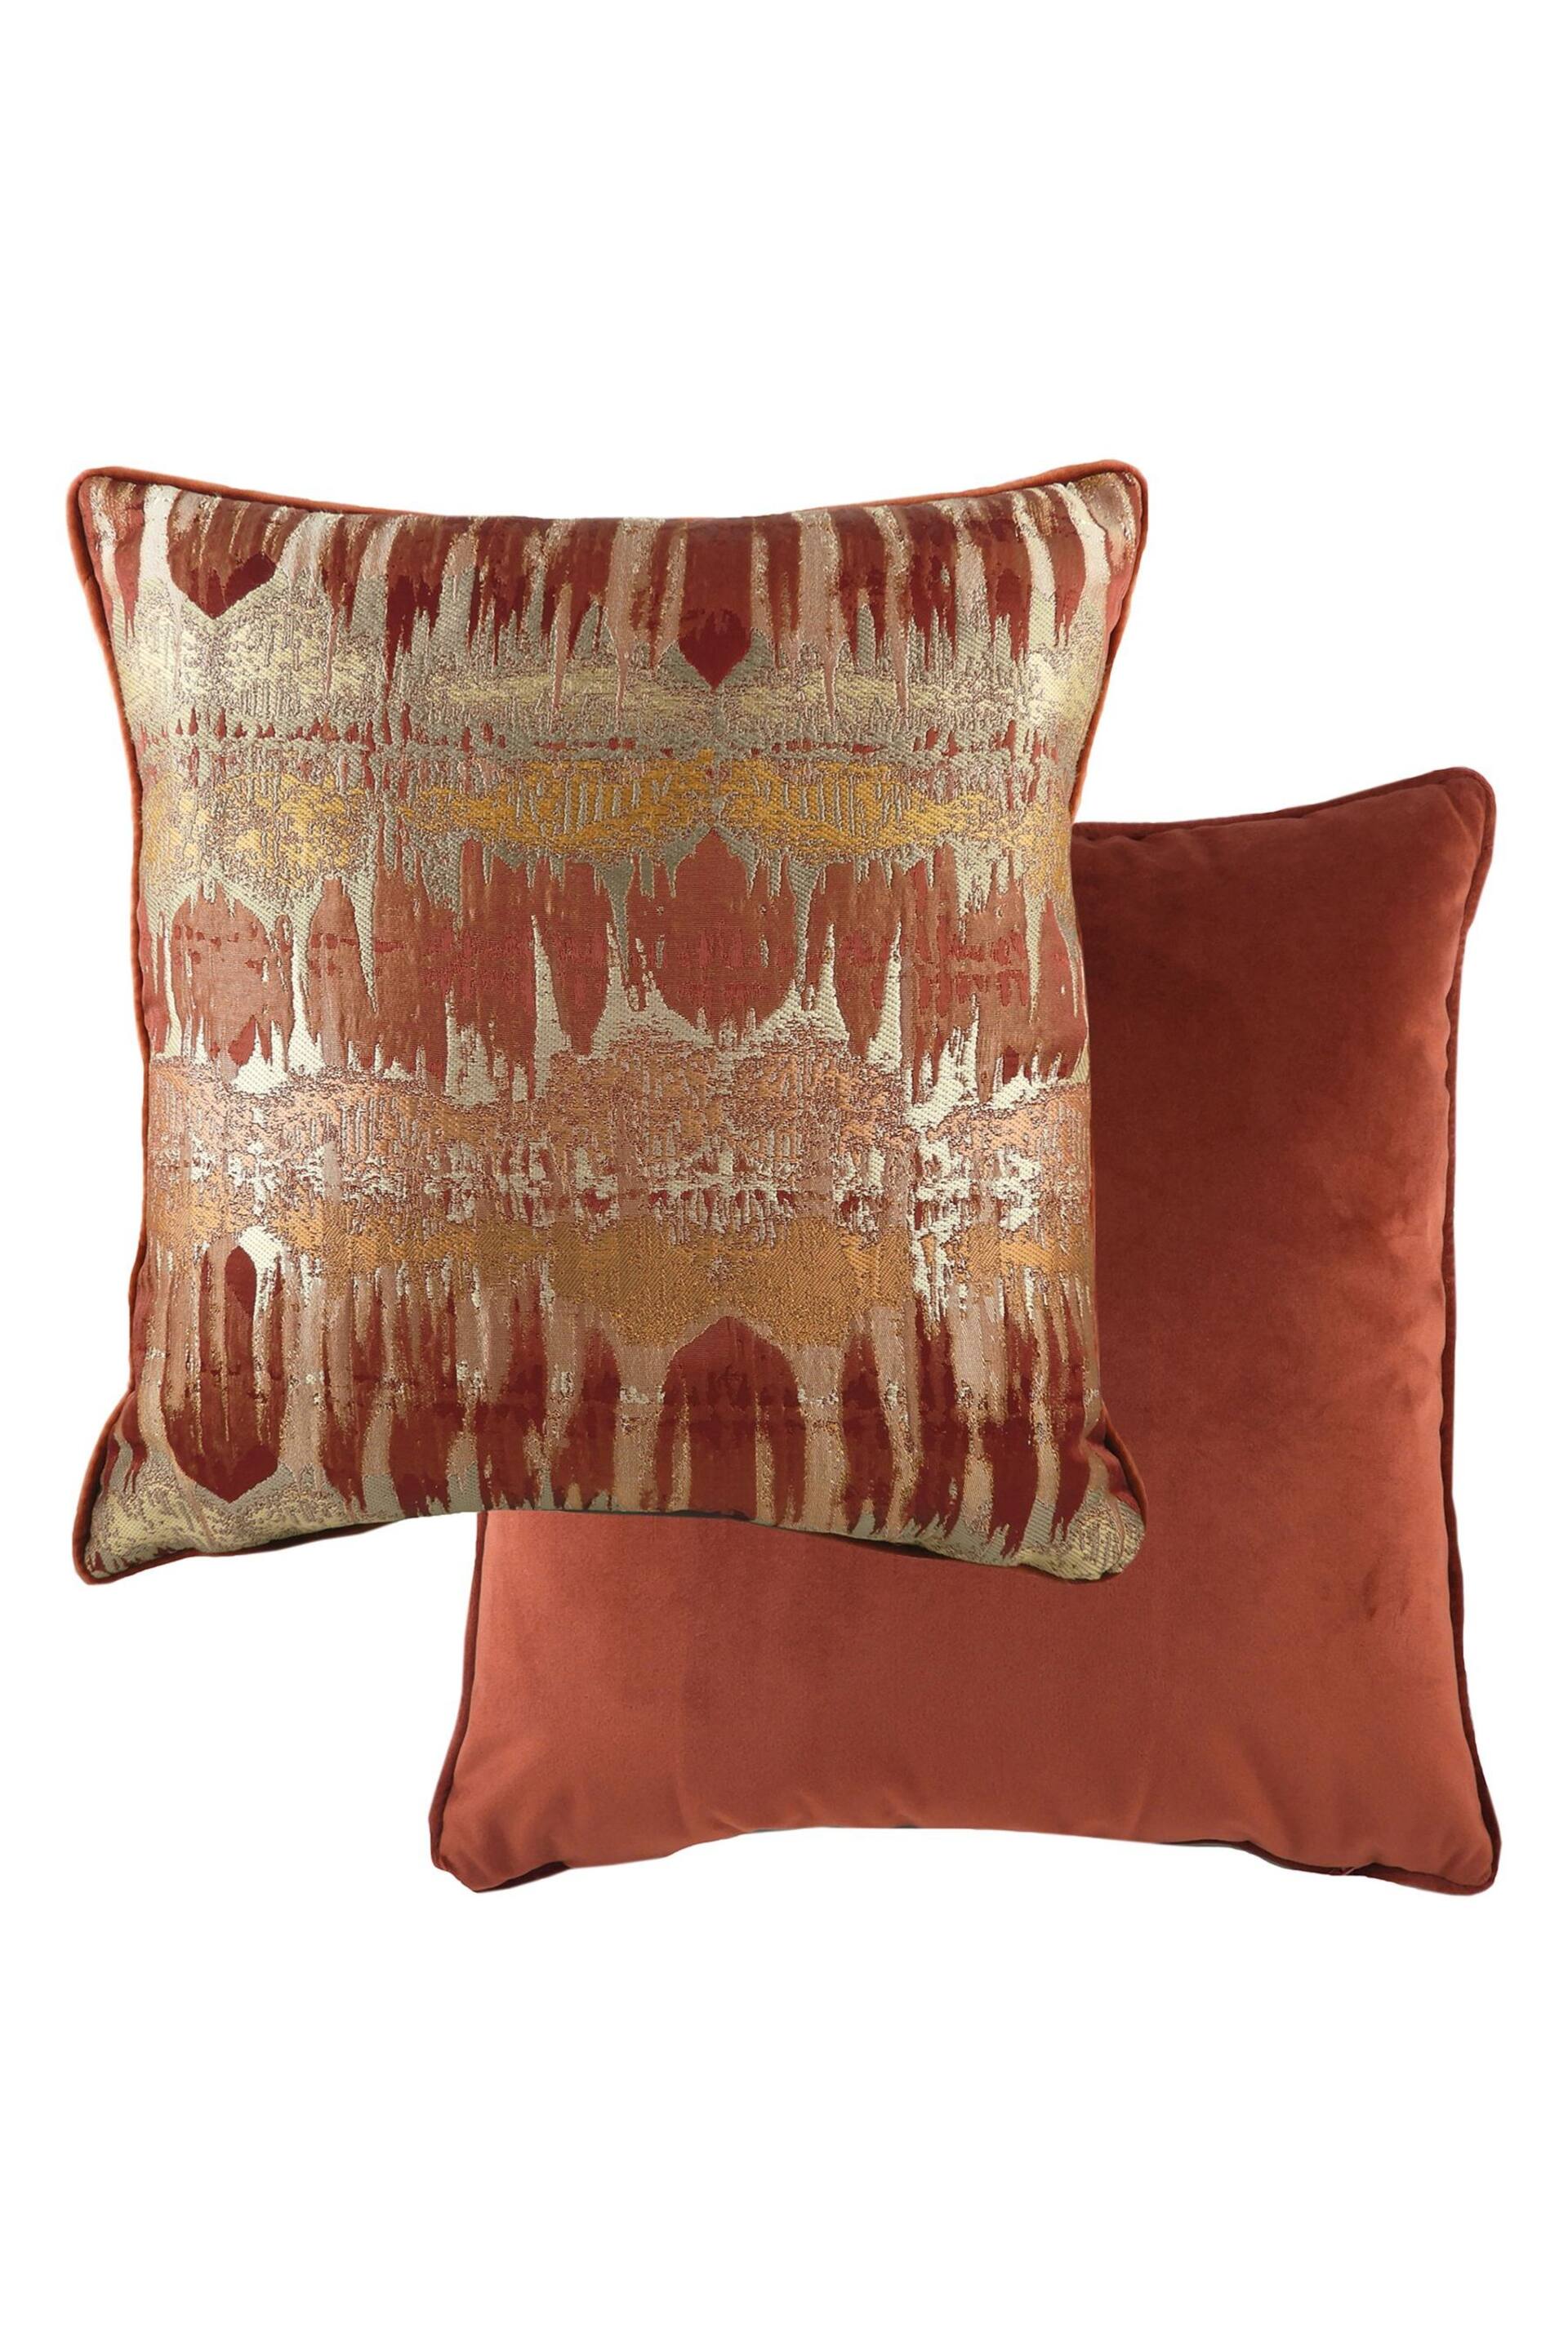 Evans Lichfield Terracotta Inca Cushion - Image 1 of 1